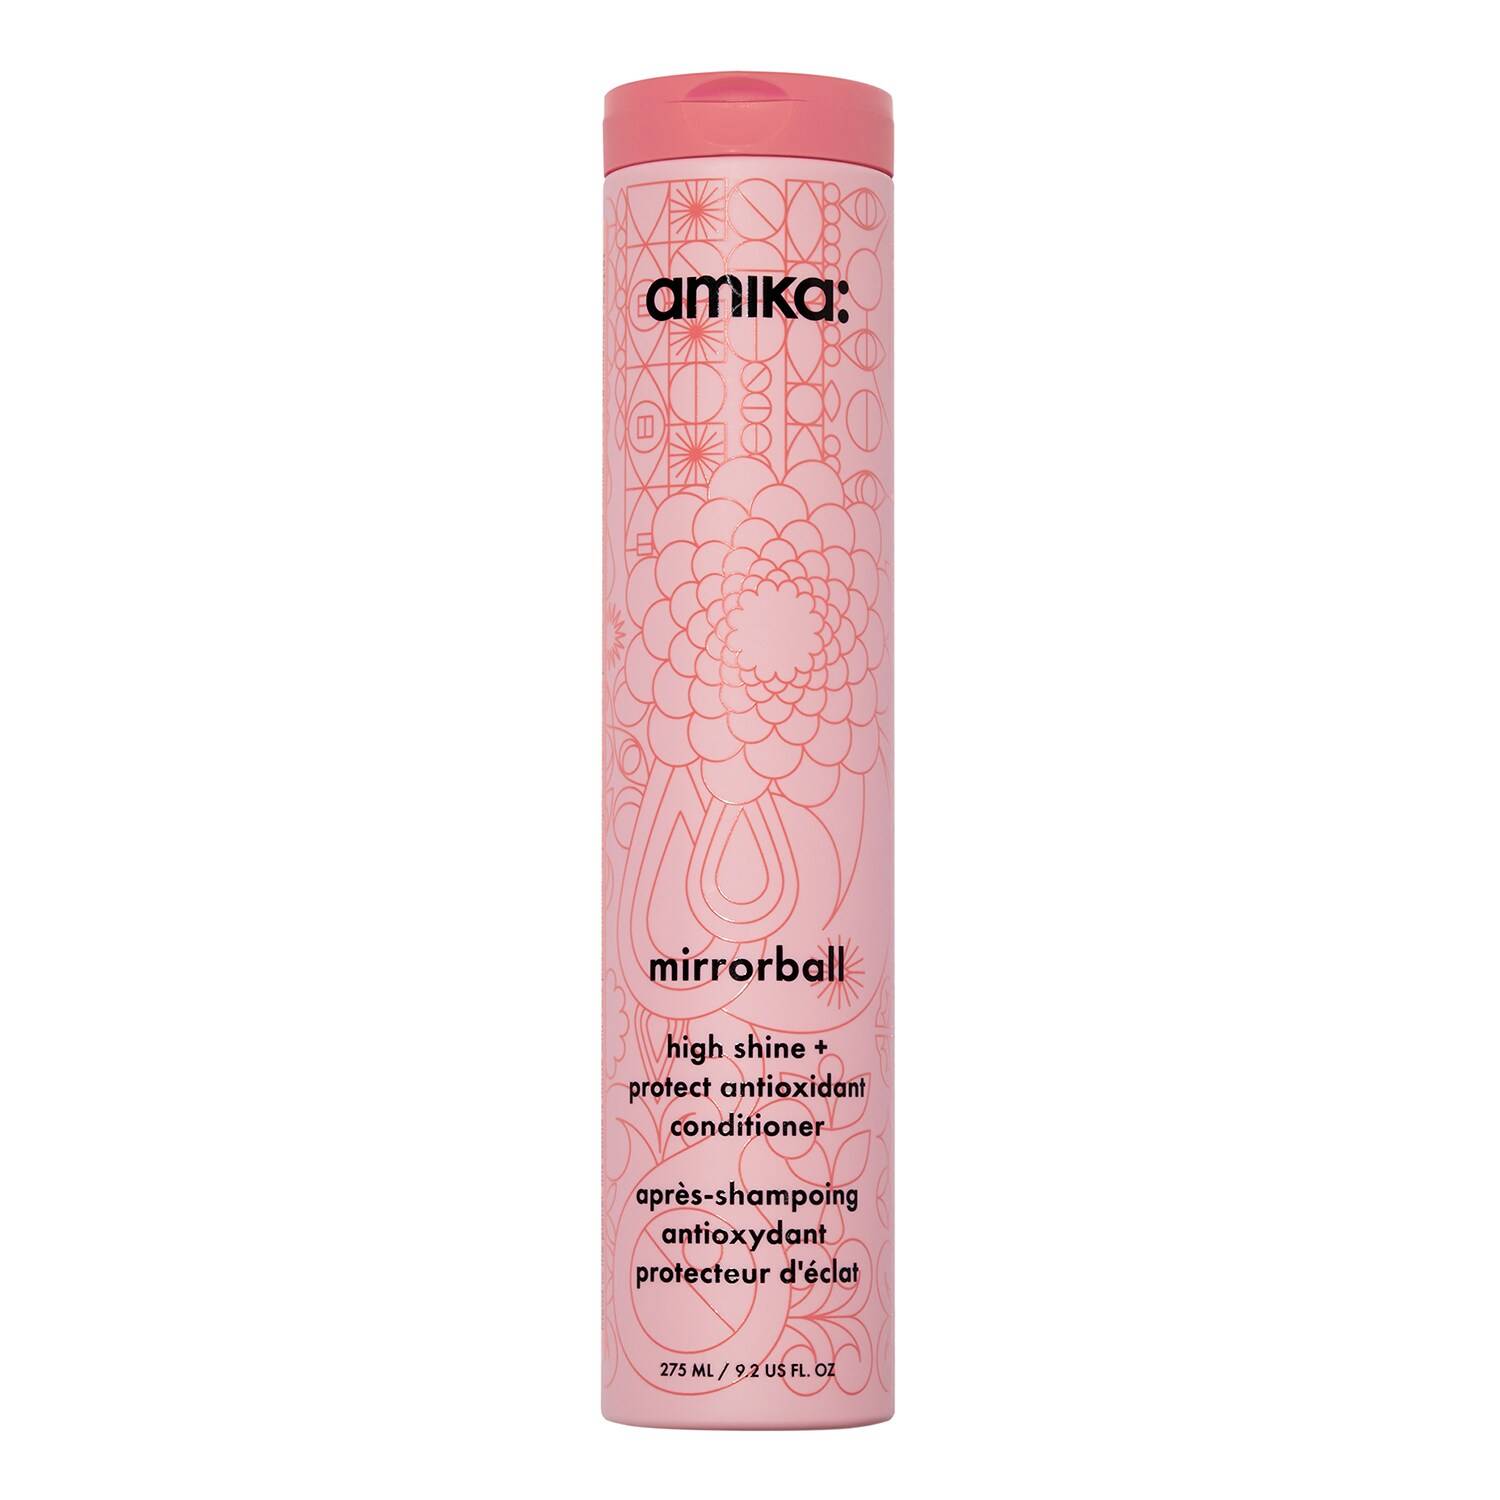 AMIKA Mirrorball High Shine+ Protect Antioxidant Conditioner 275ml